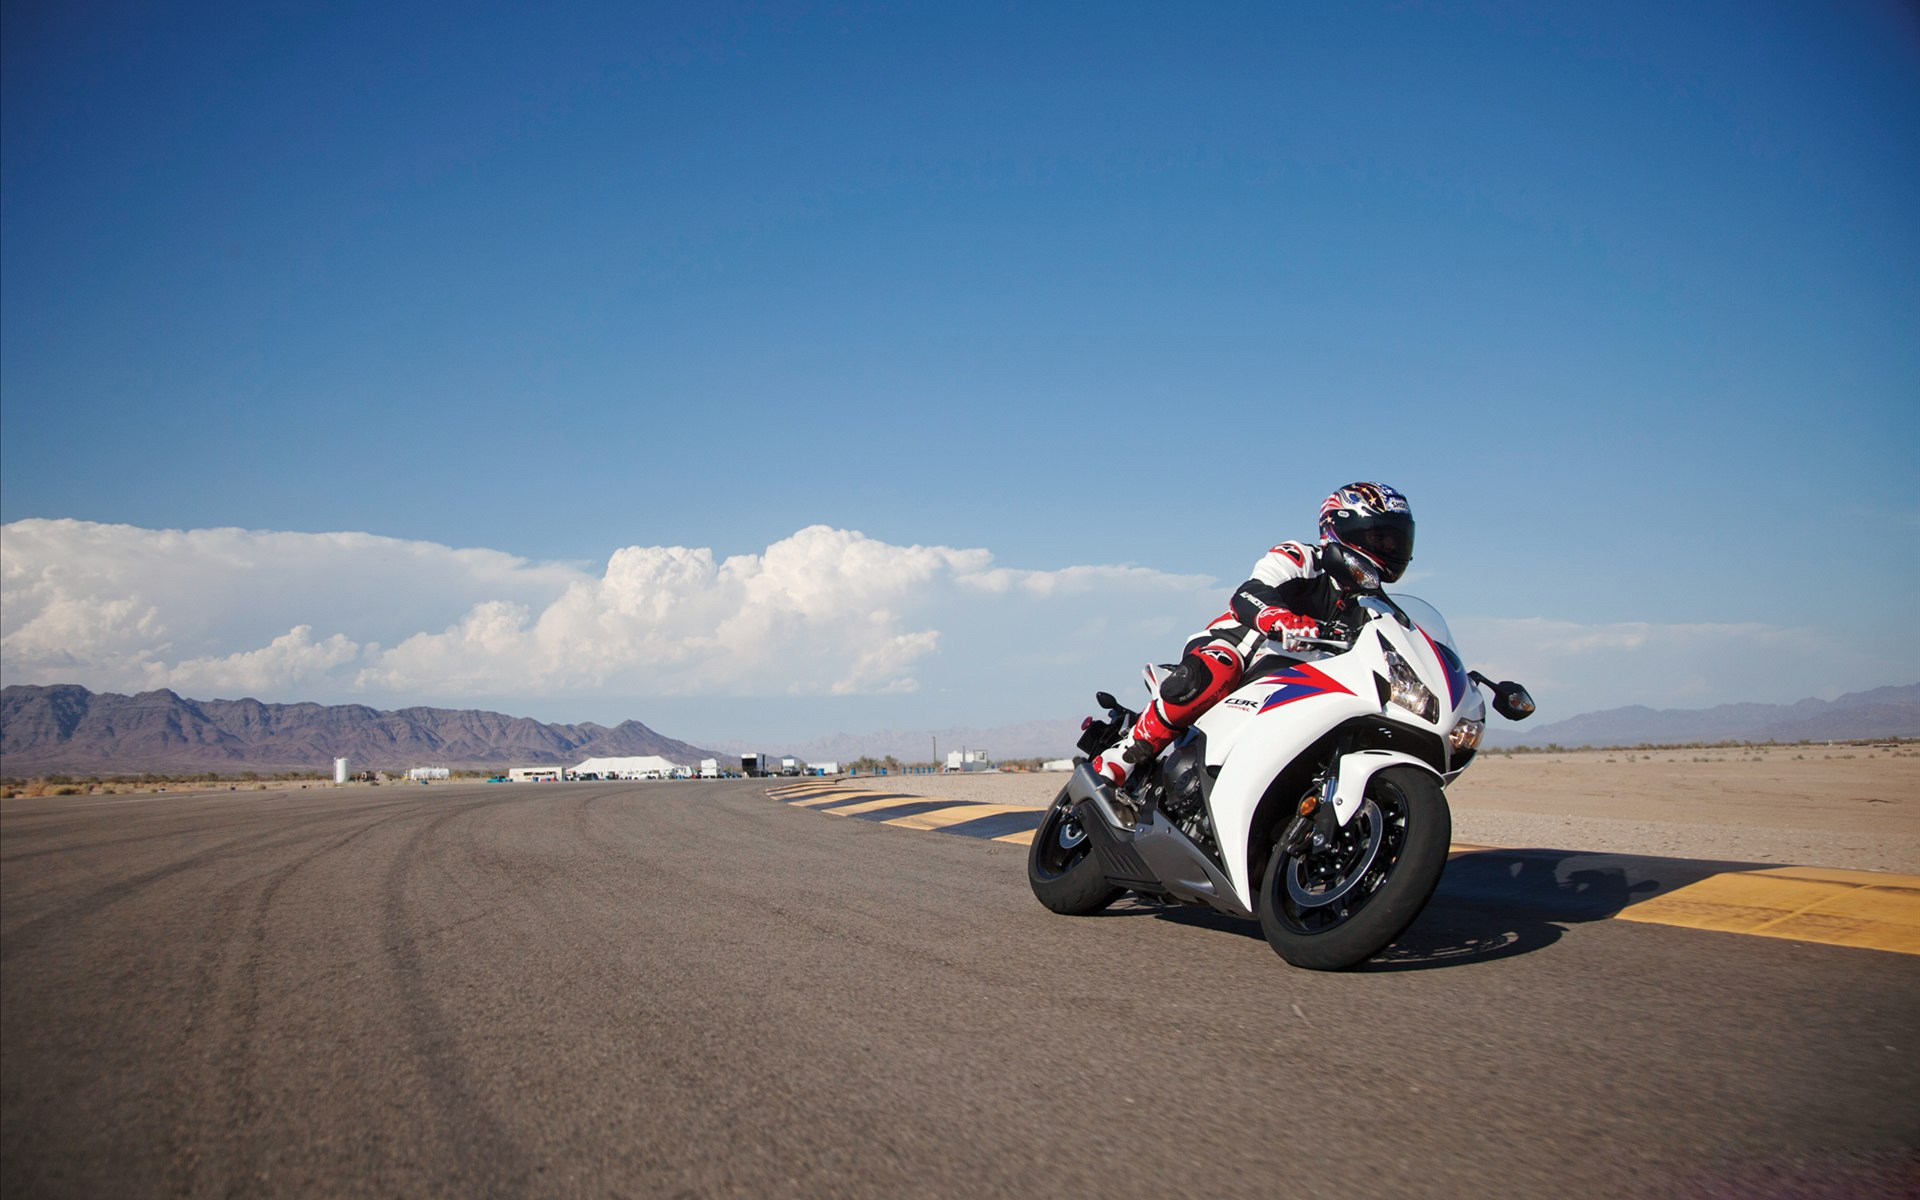 honda motorcycle wallpaper,motorcycle,motorcycle racer,motorcycling,vehicle,superbike racing